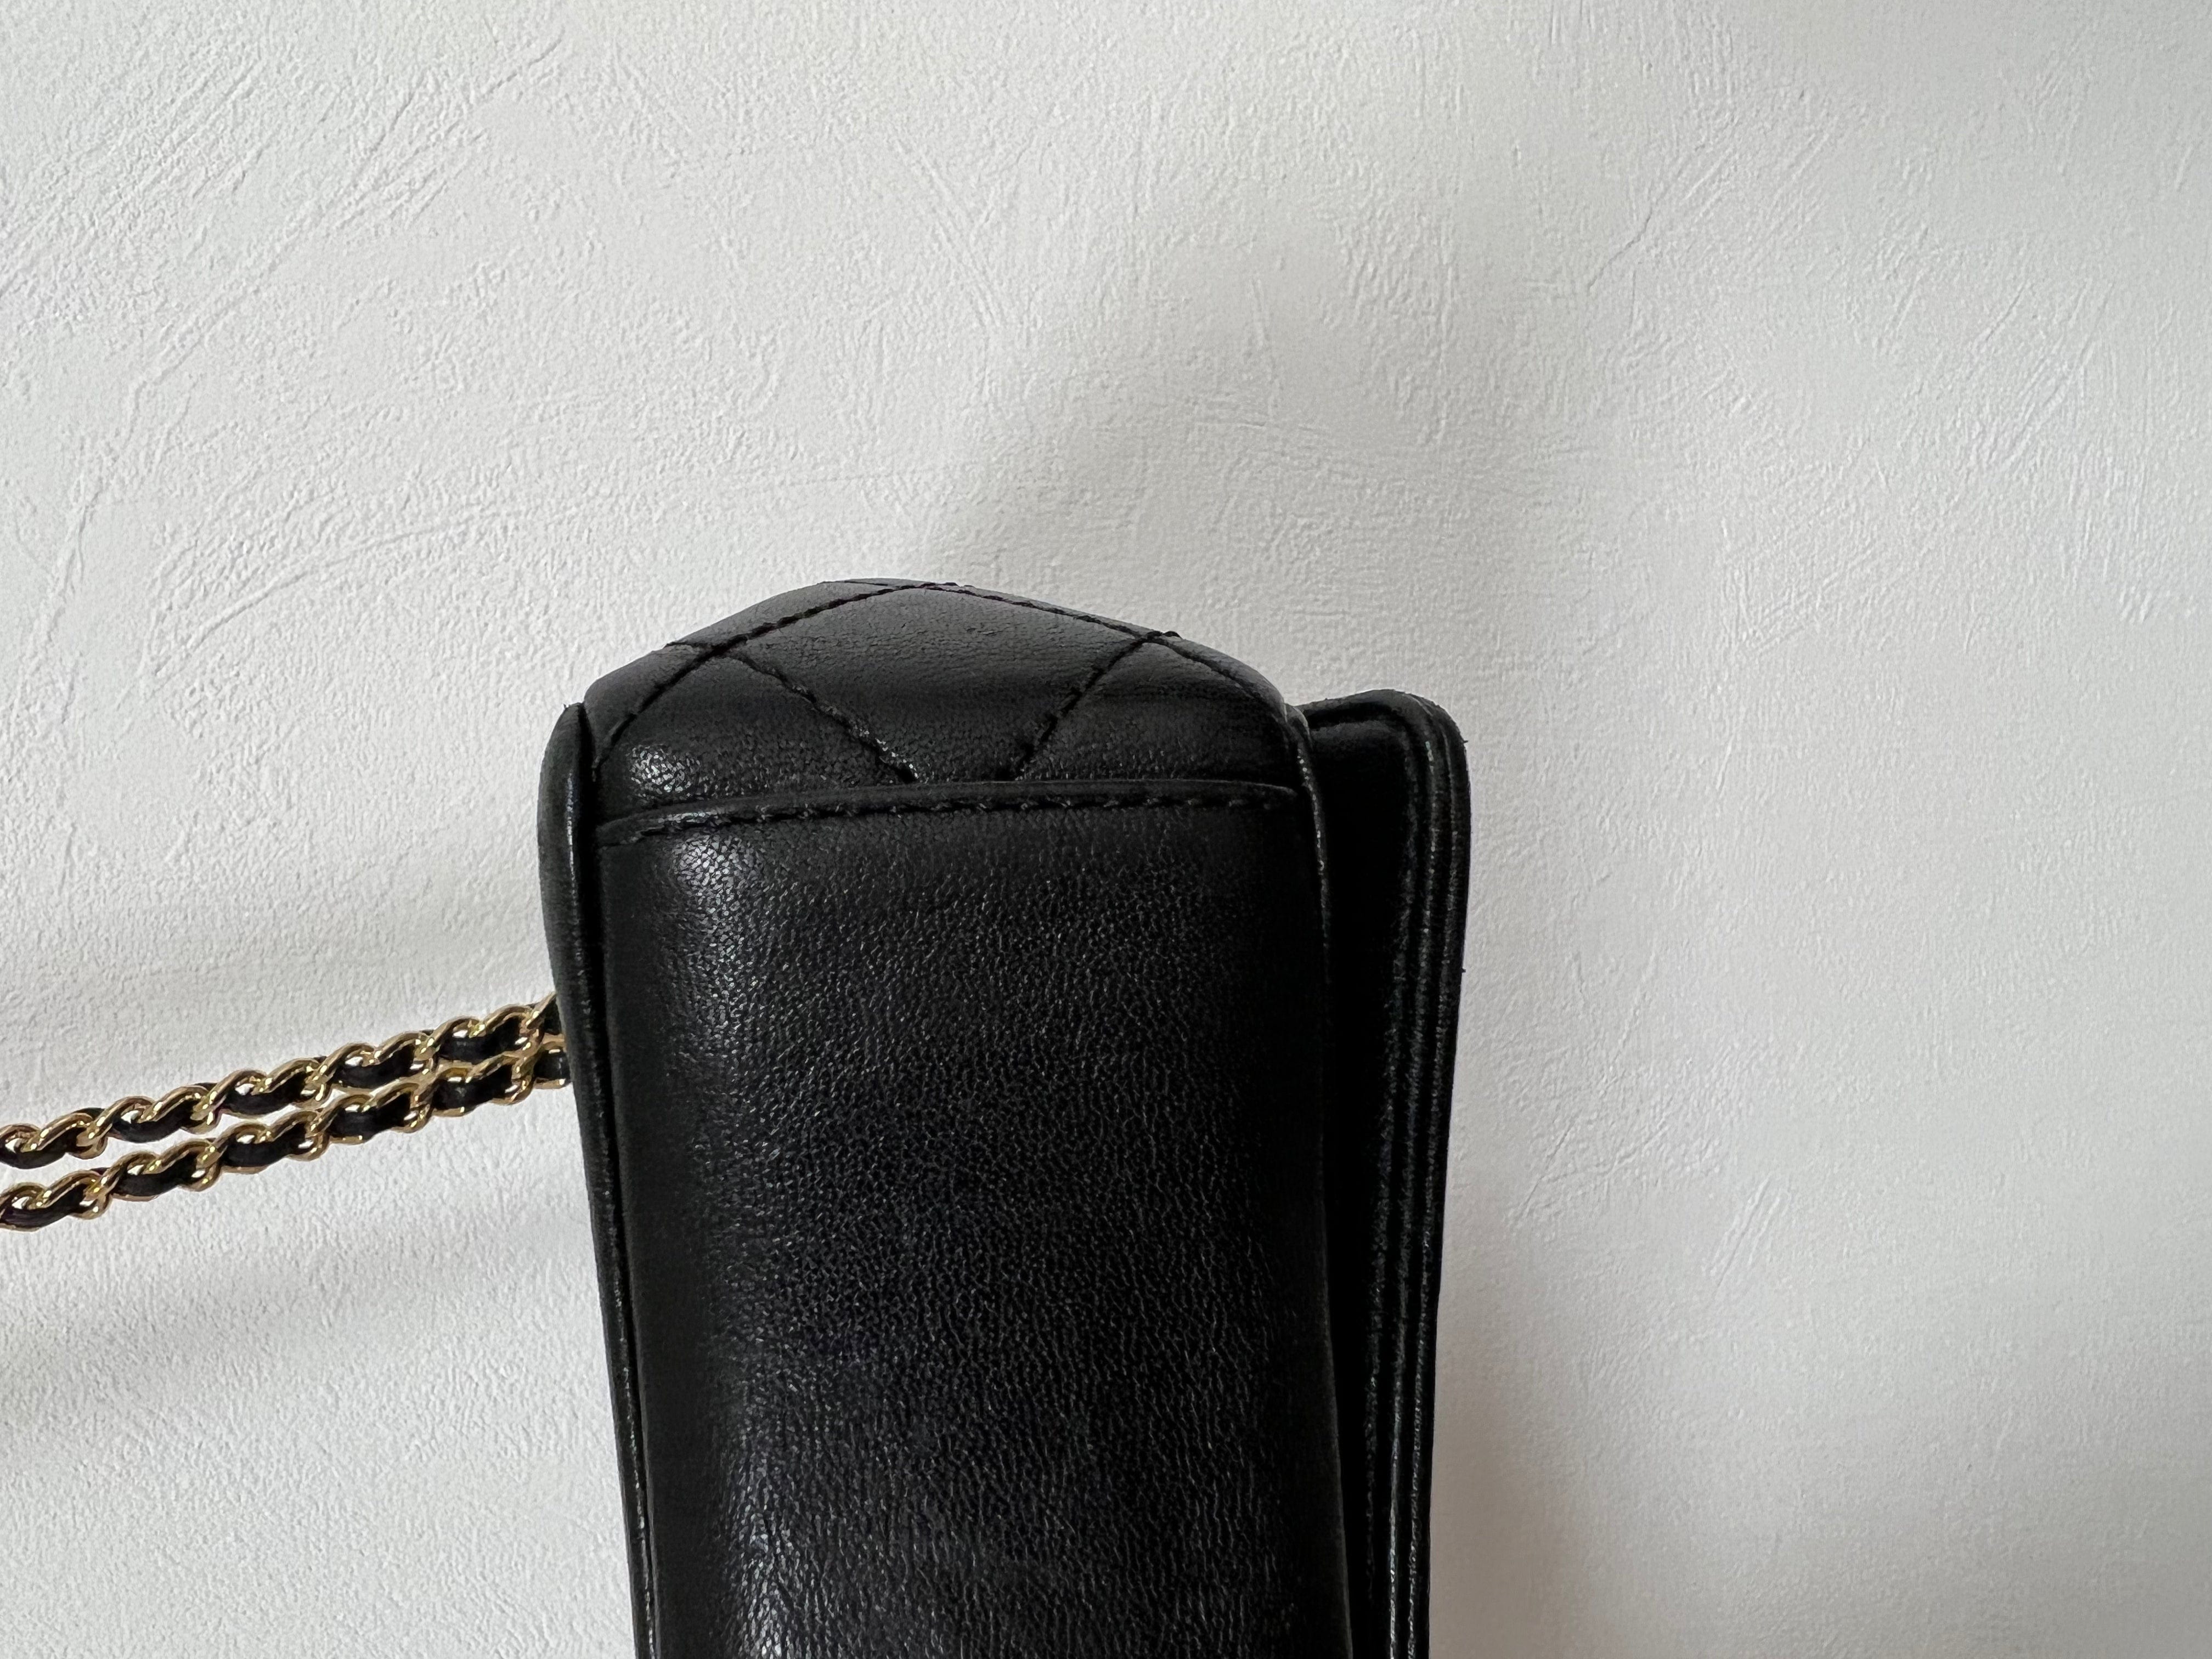 Chanel Chanel black flap matelasse (black) - AWL3273